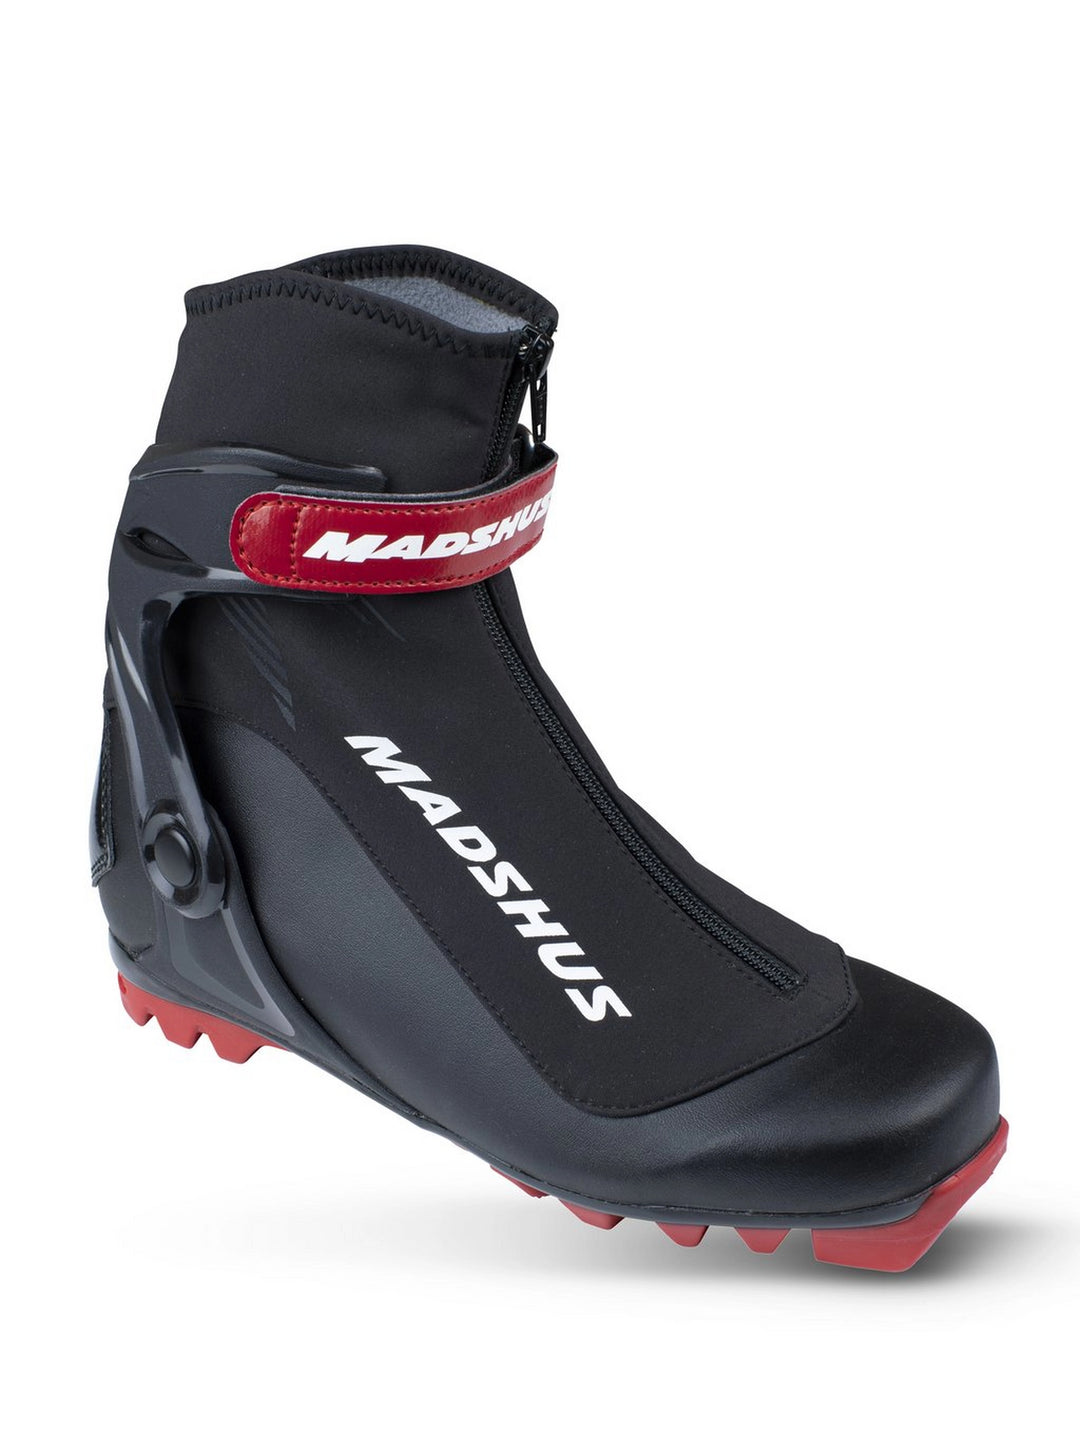 Madshus Endurace S Ski Boots Men's